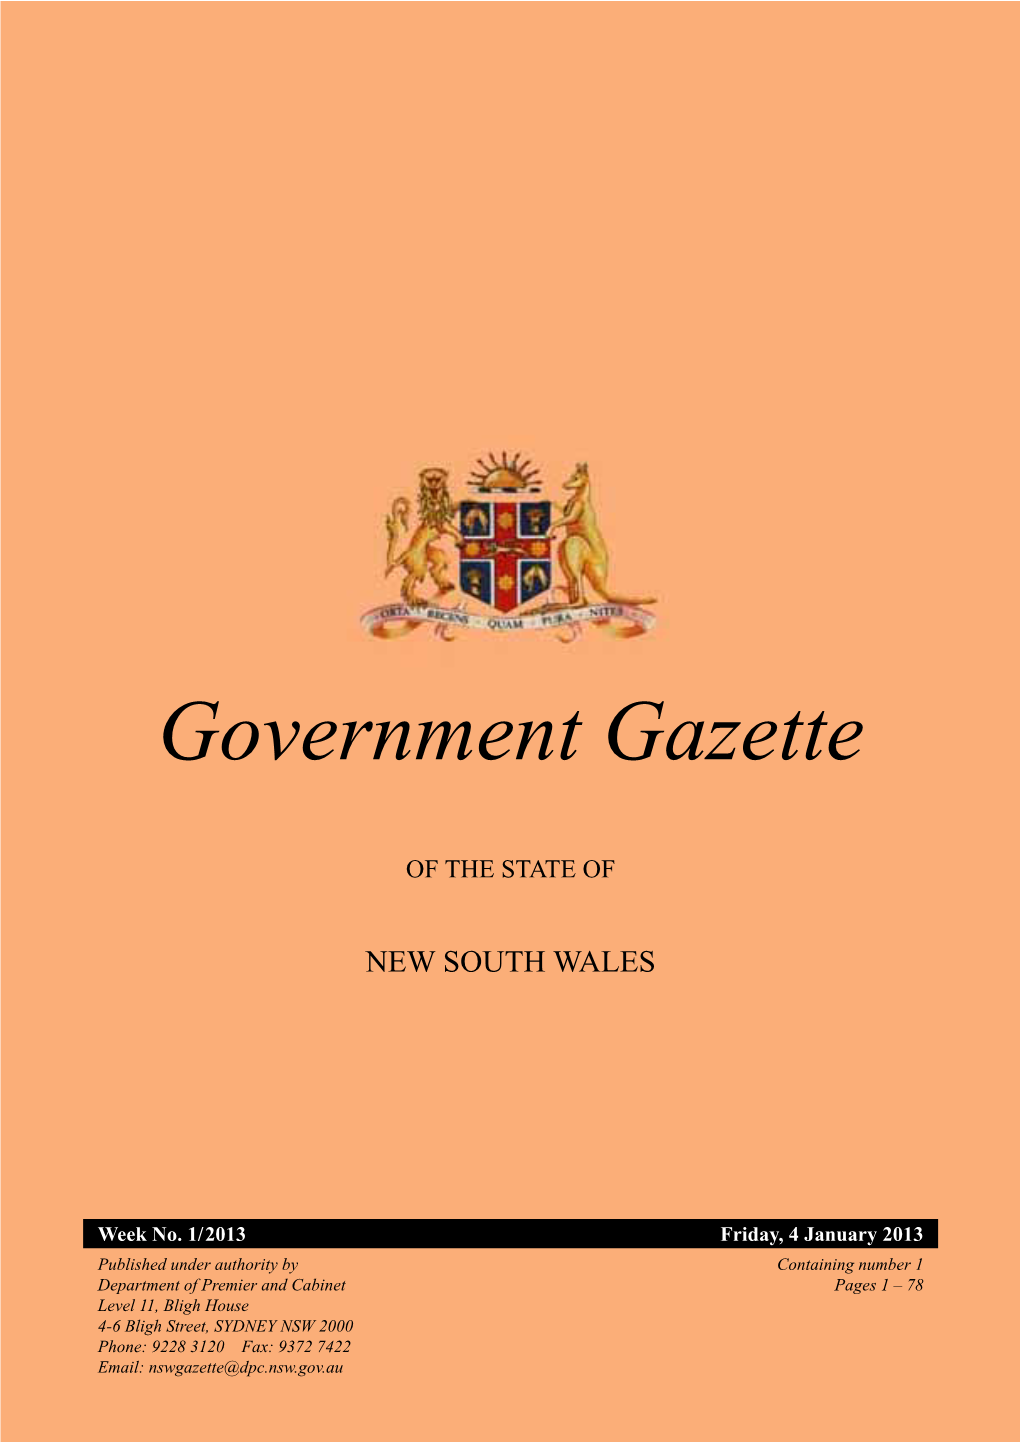 Government Gazette of 4 January 2013